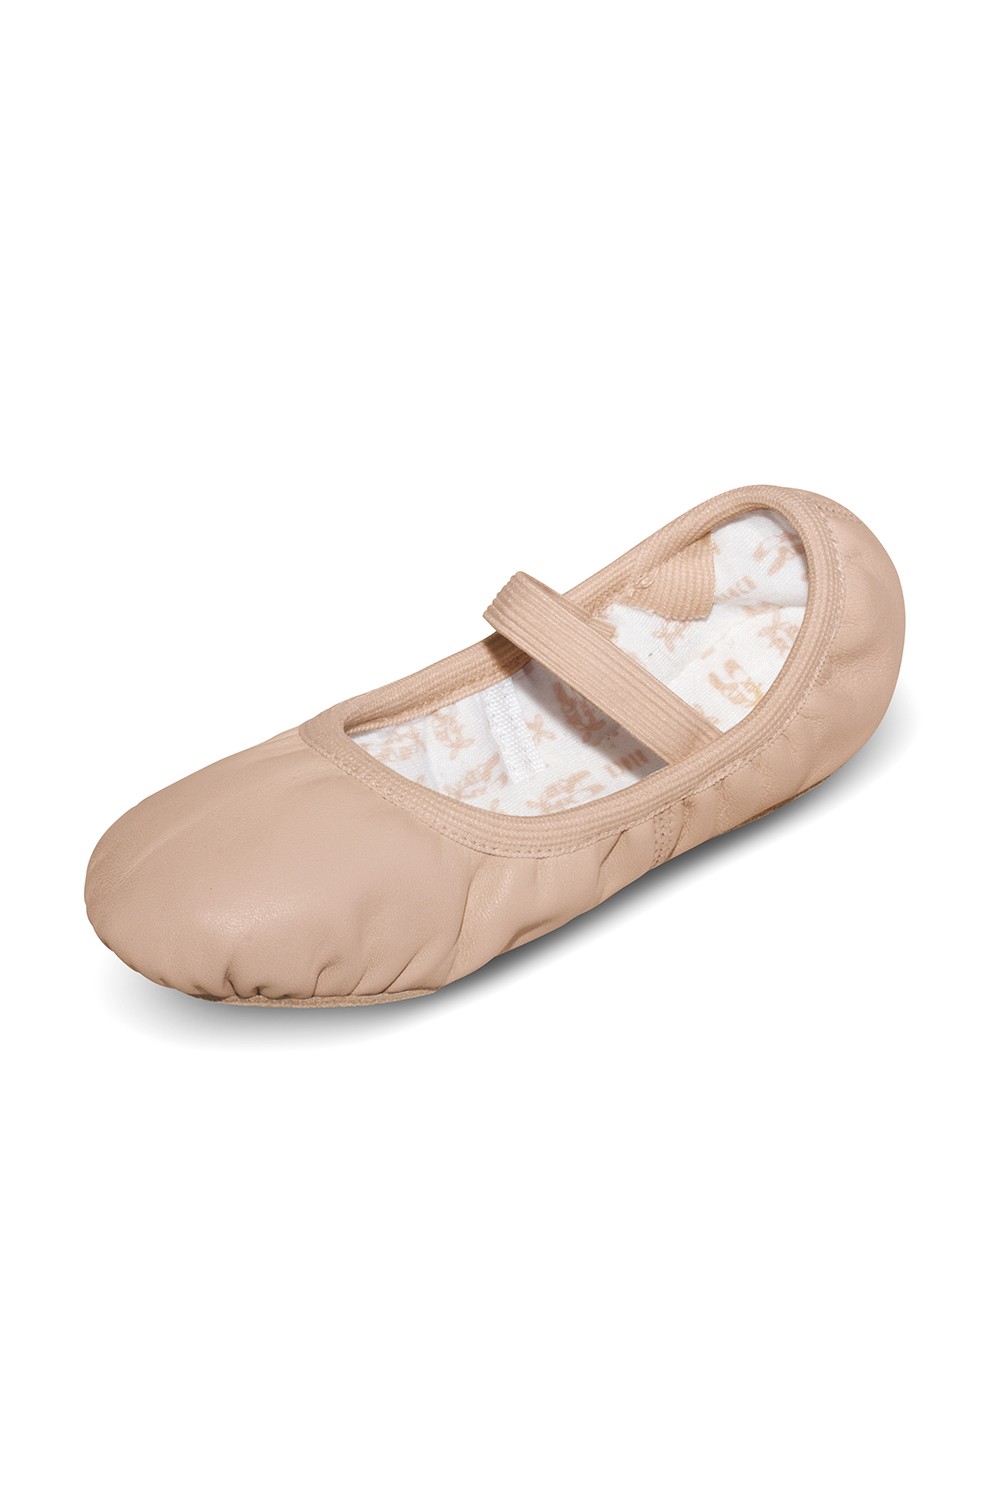 BLOCH® Soft Ballet Shoes - BLOCH® US Store